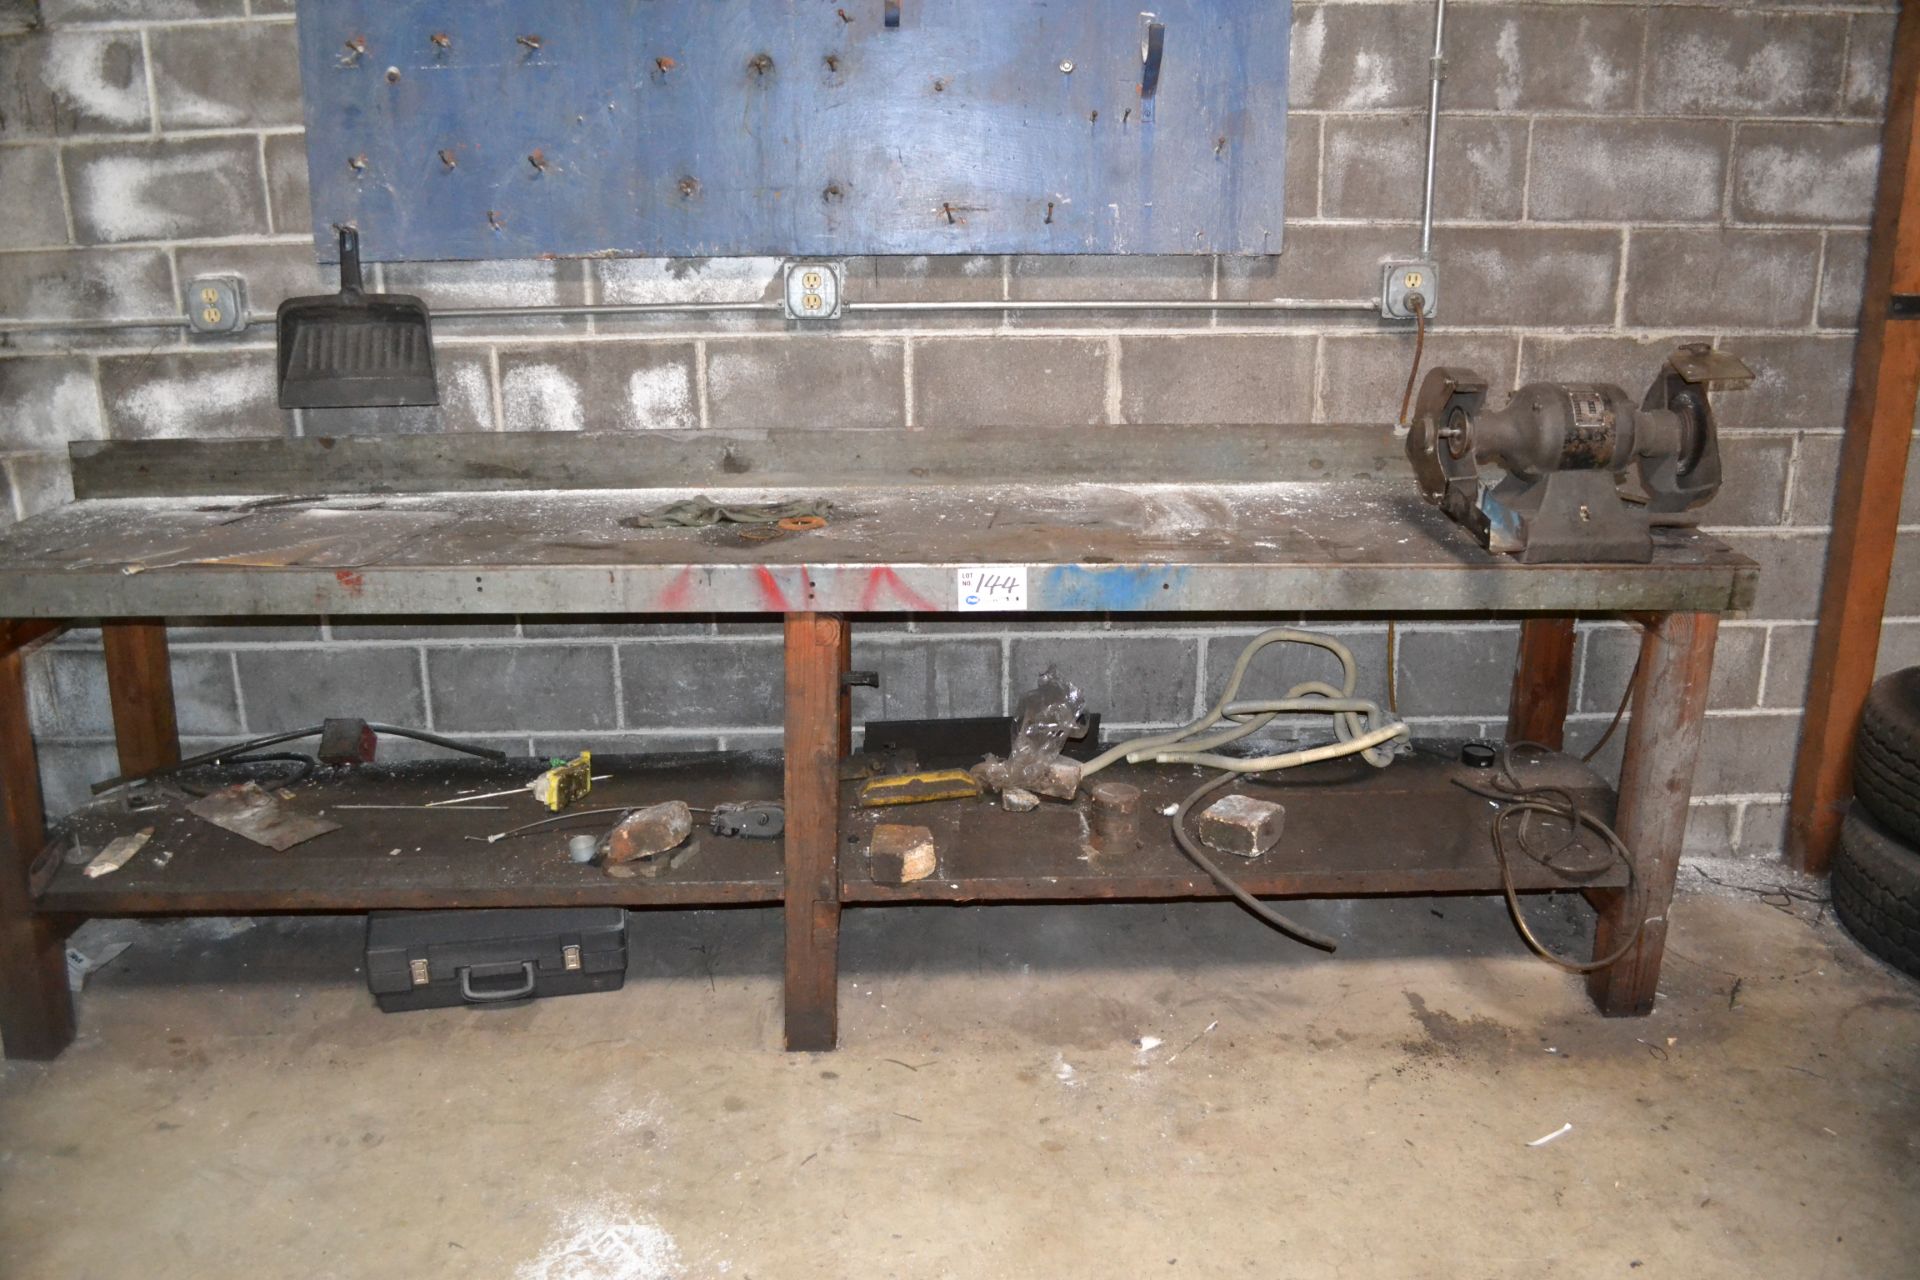 2.5' X 12' Metal Top Bench with Milwaukee 1/2 hp Grinder